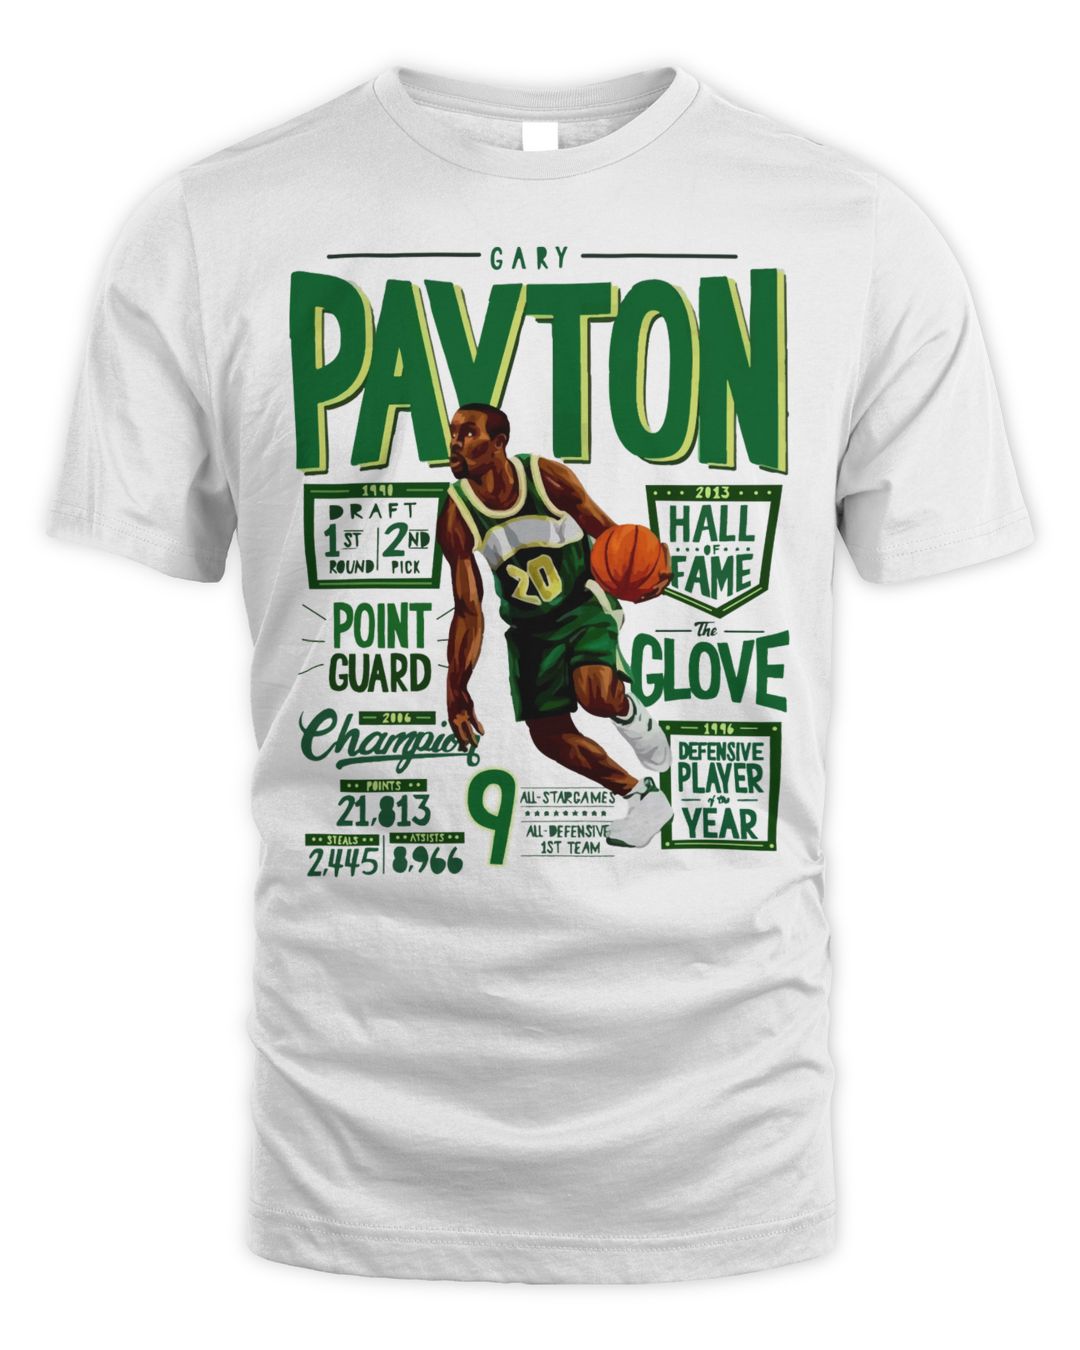 Gary Payton Merch Position G Shirt